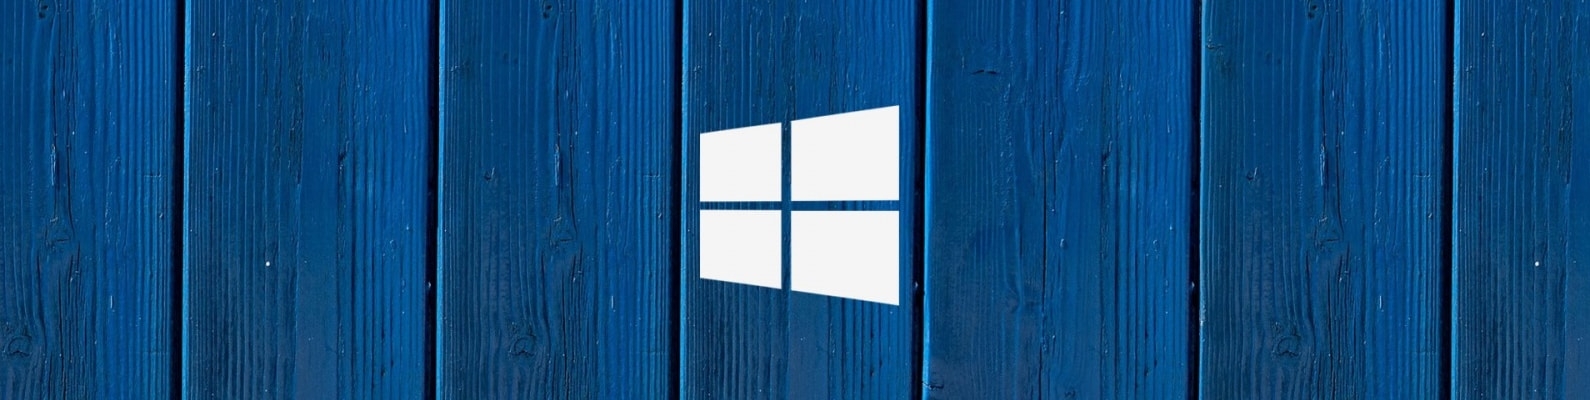 windows, hi-tech, blue, microsoft